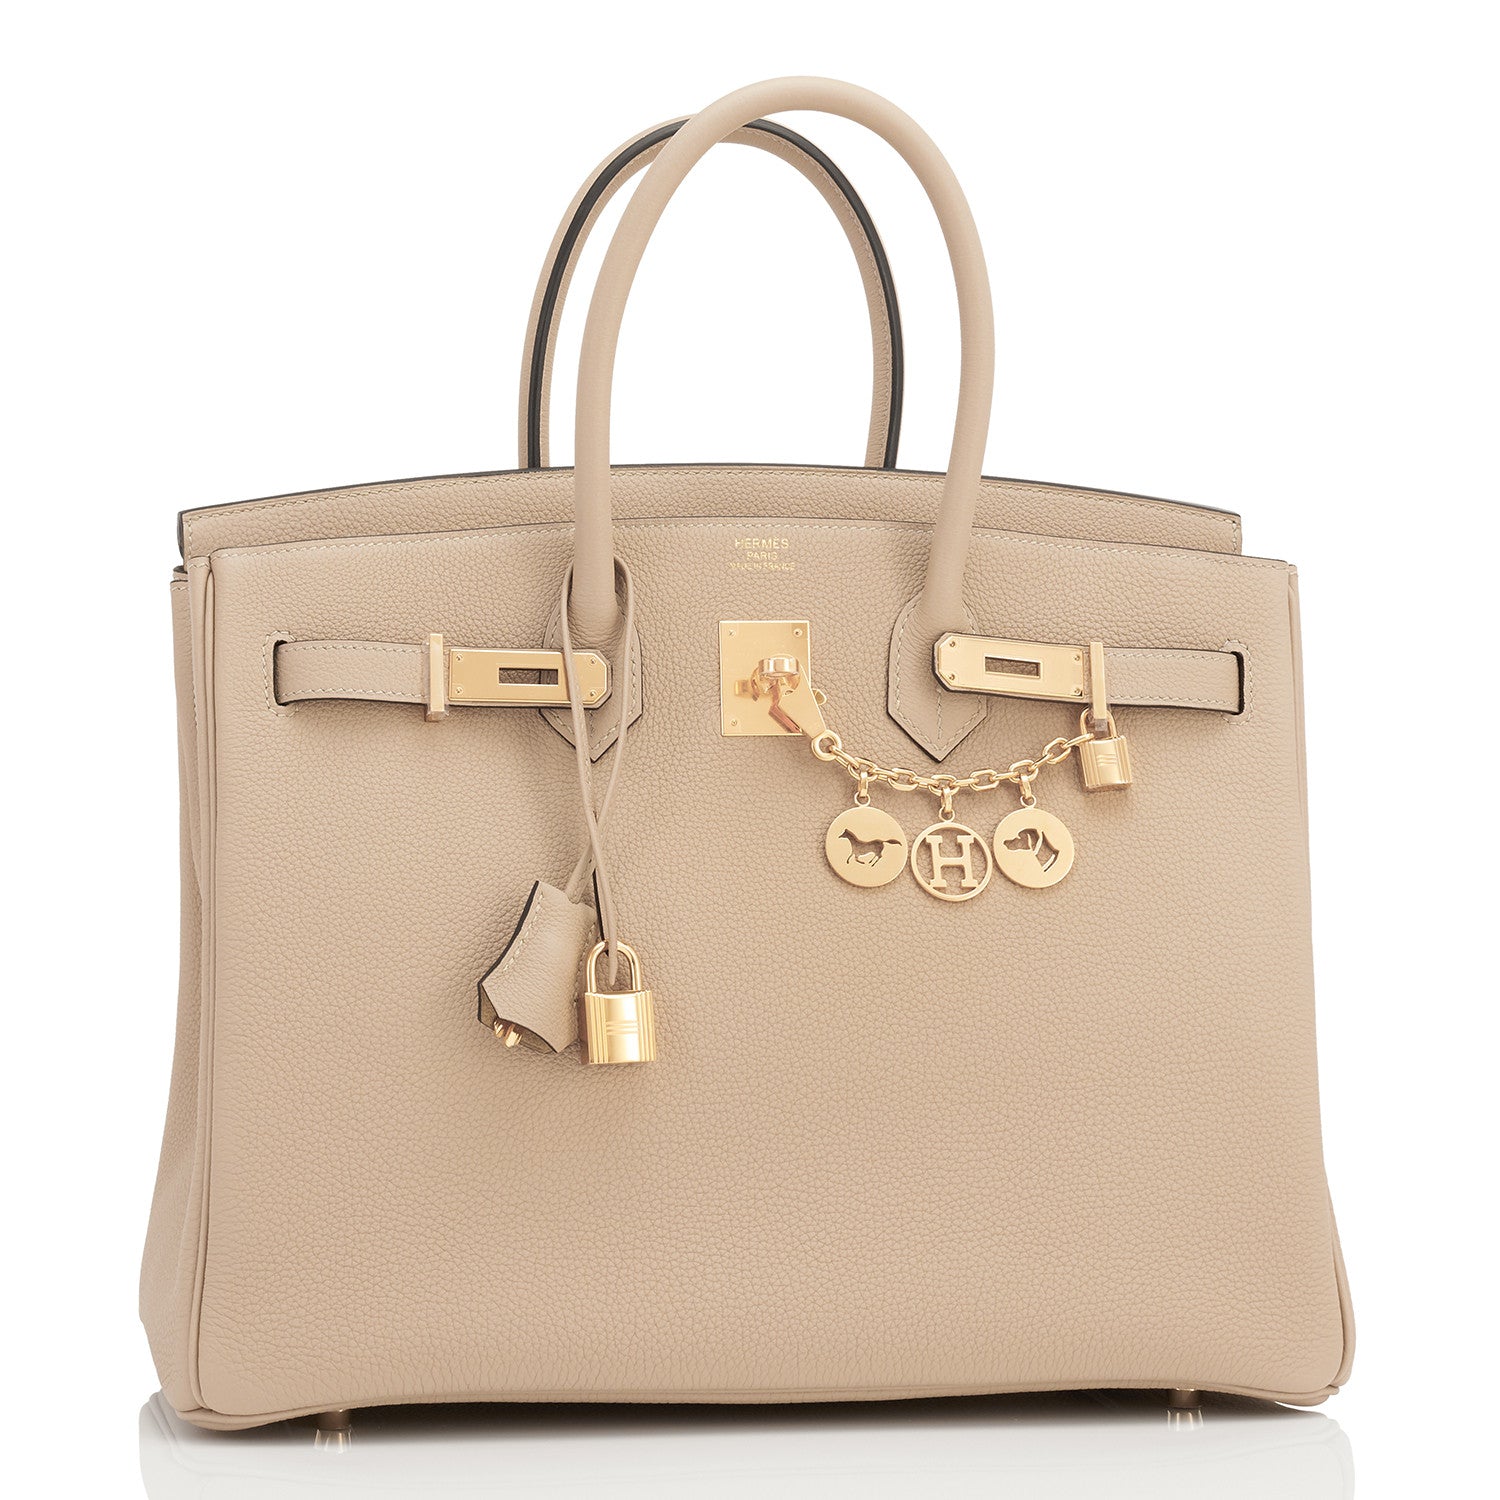 Hermes Birkin Womens Handbags, Beige